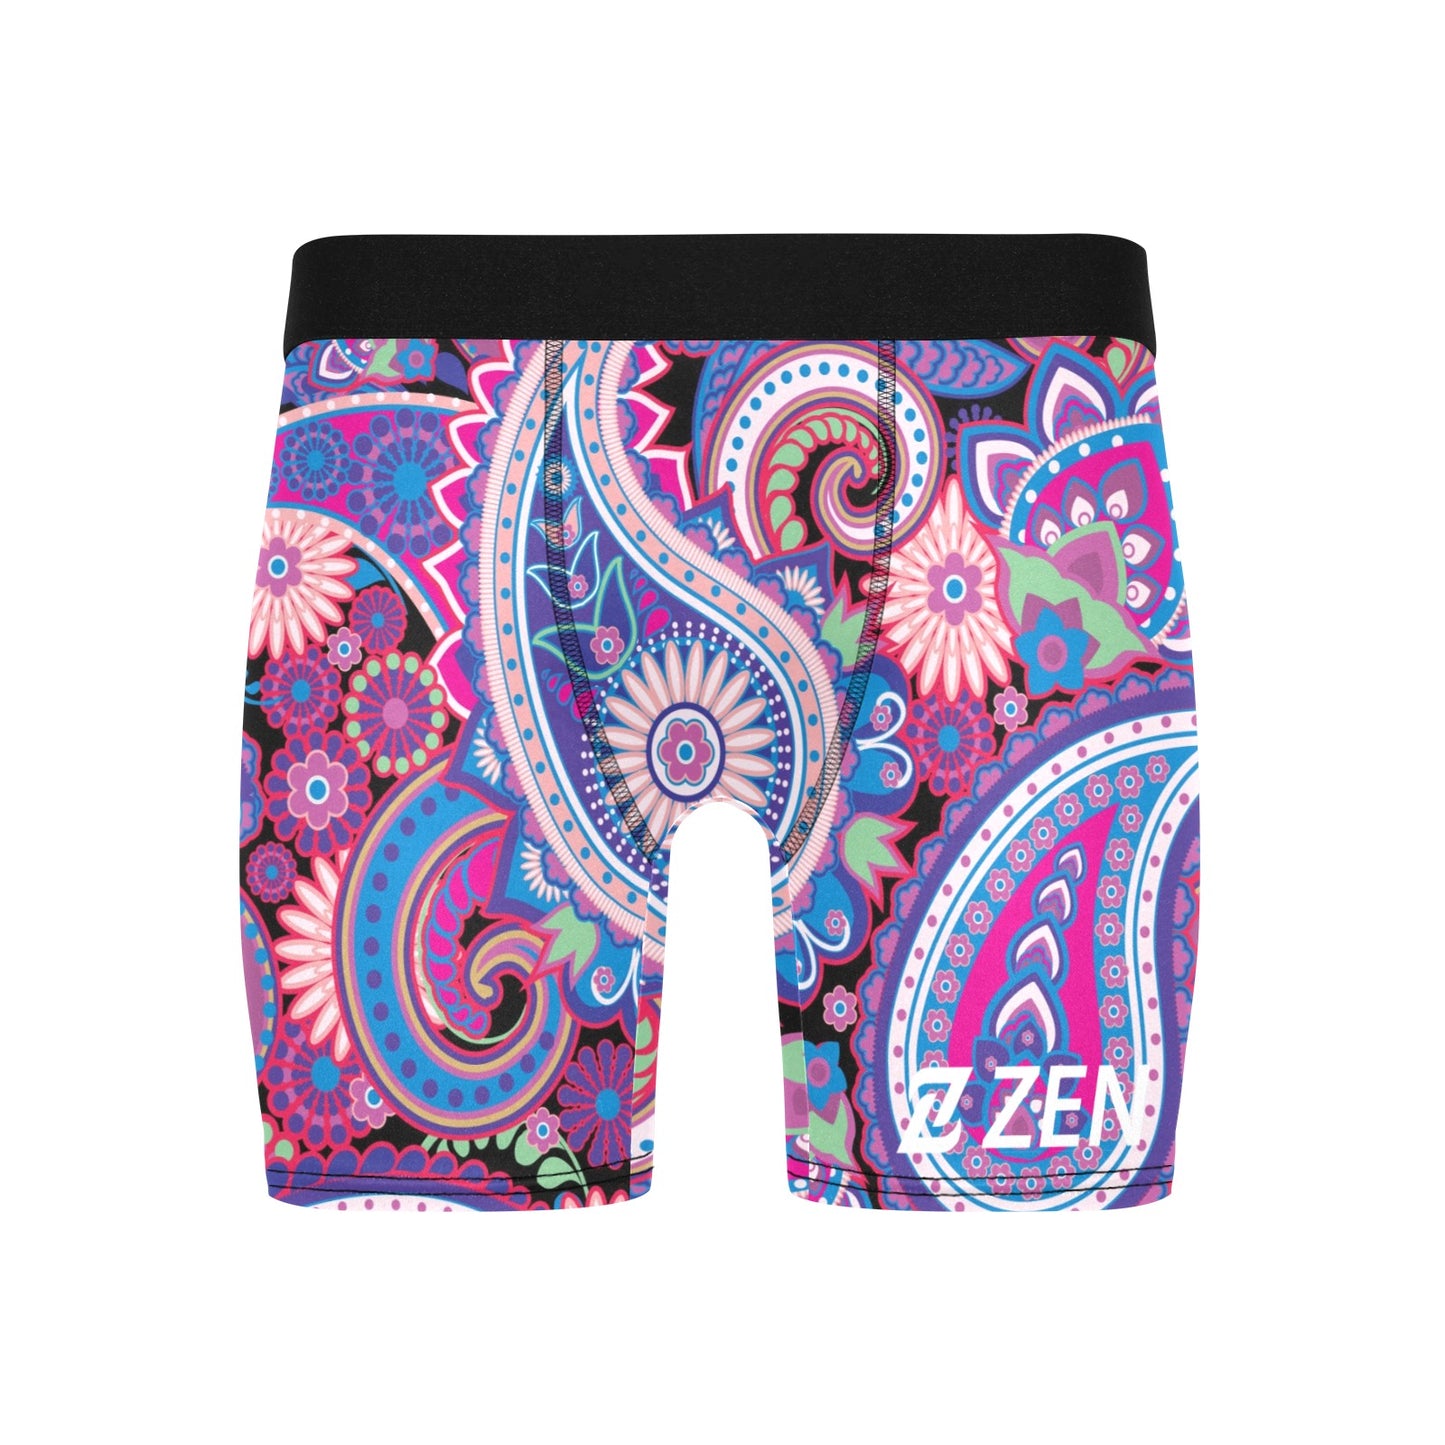 Zen Boxers Long - Purple Paisley